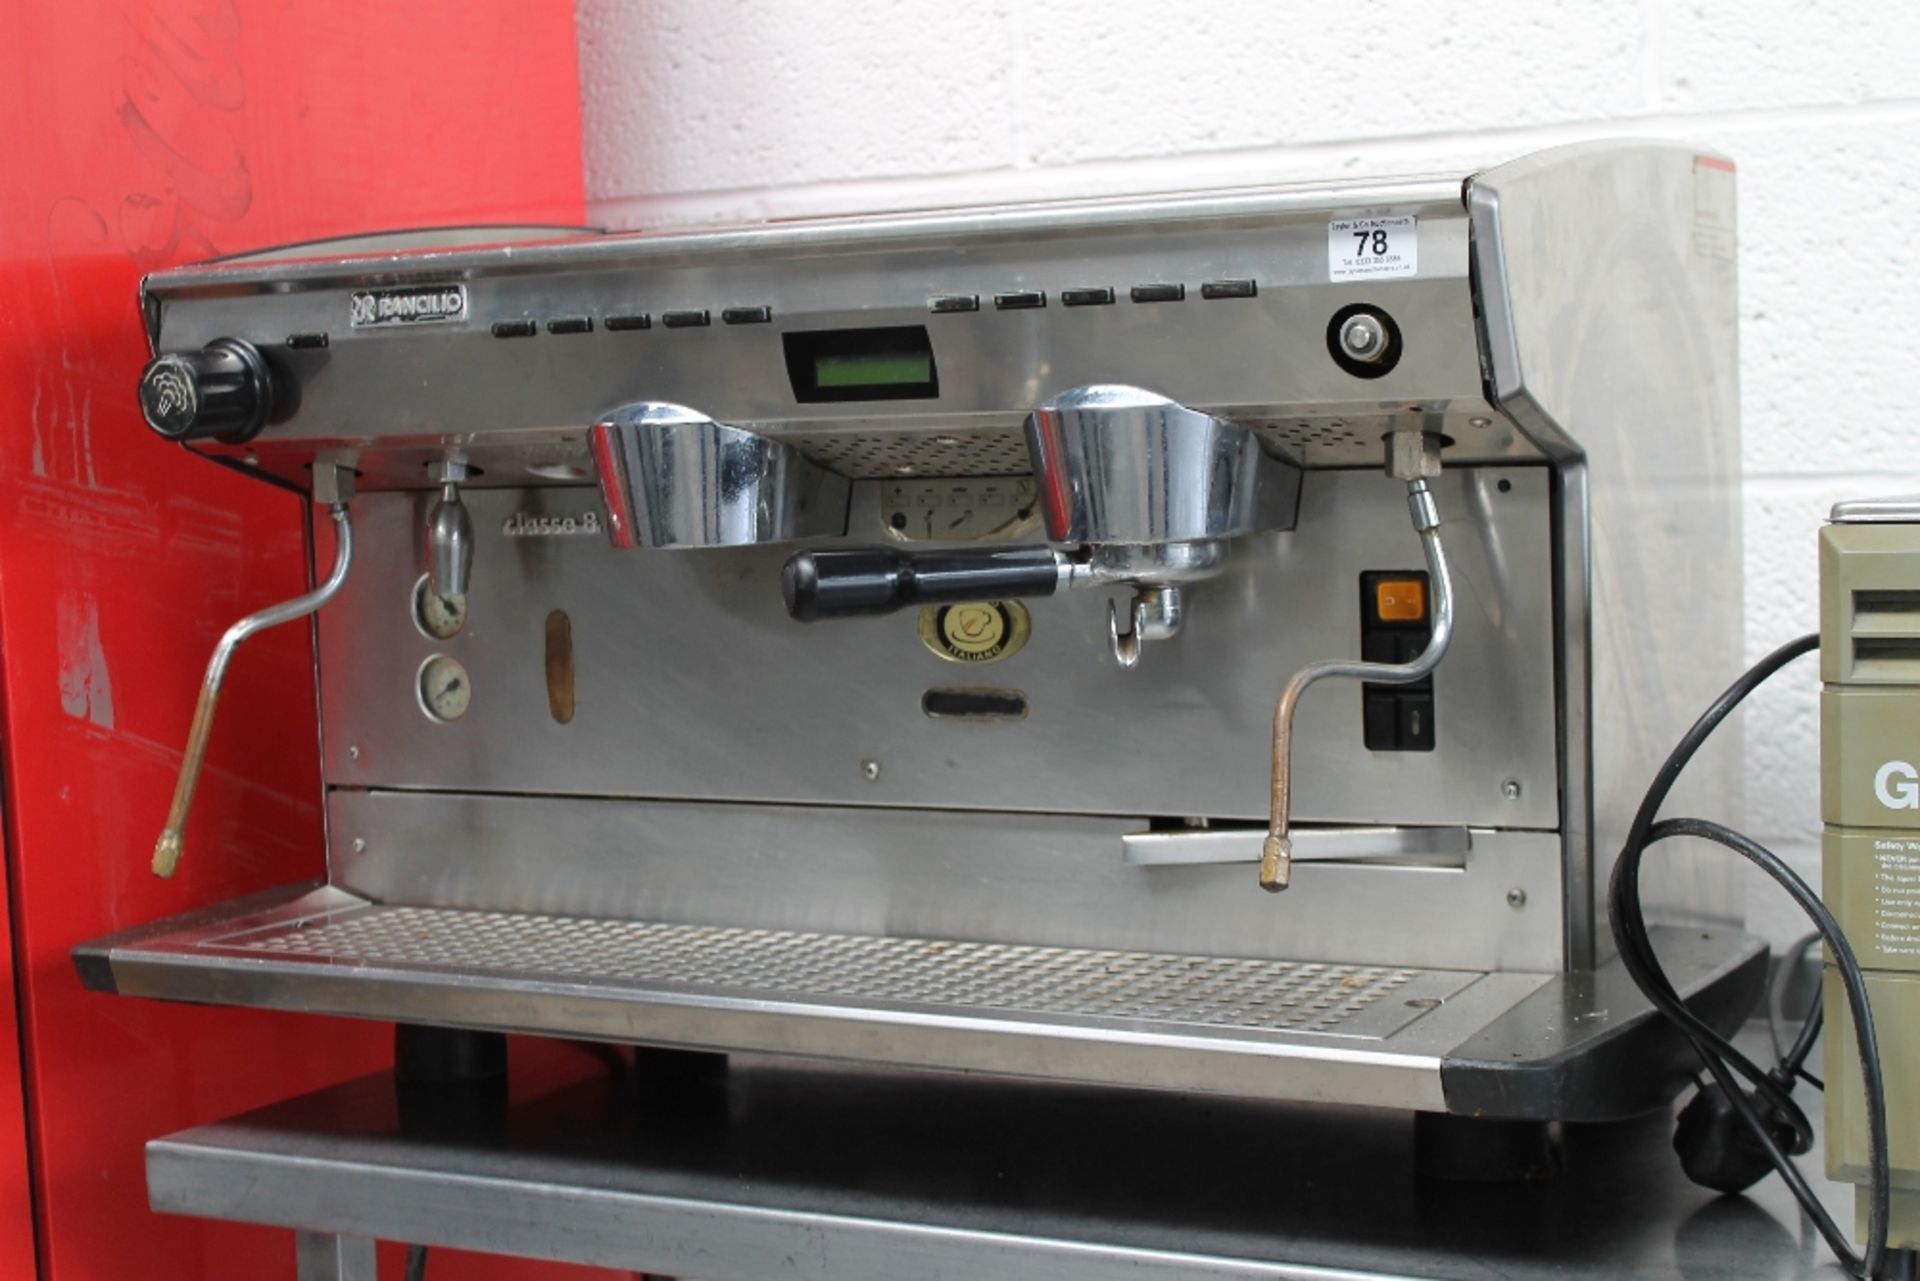 Rancilio 2 Group Espresso Coffee Machine – 1-ph – Tested – NO VAT - Image 2 of 2